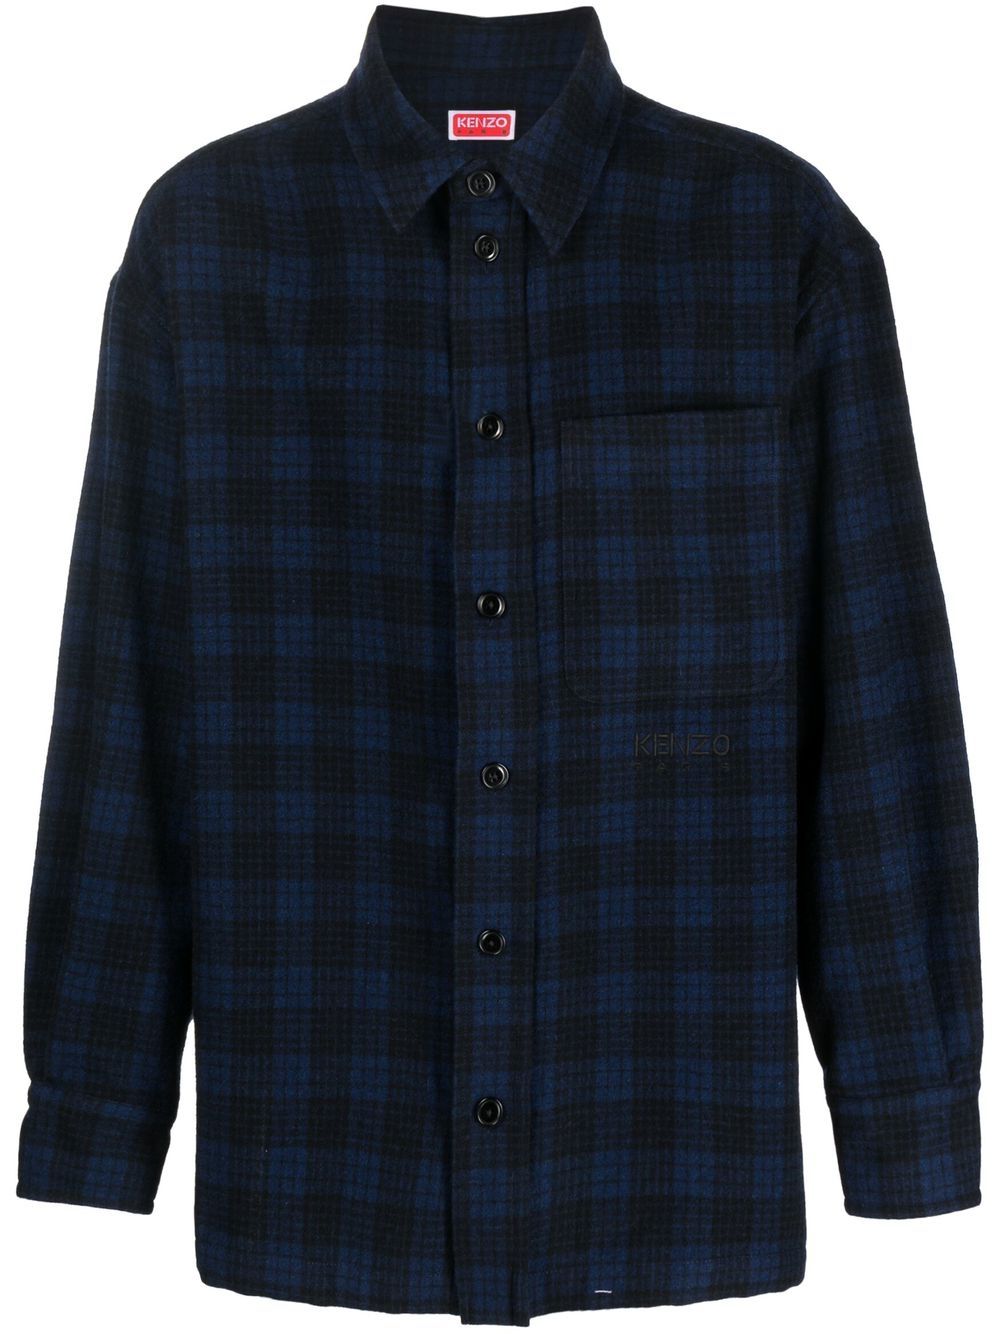 Image 1 of Kenzo check-pattern button-up shirt